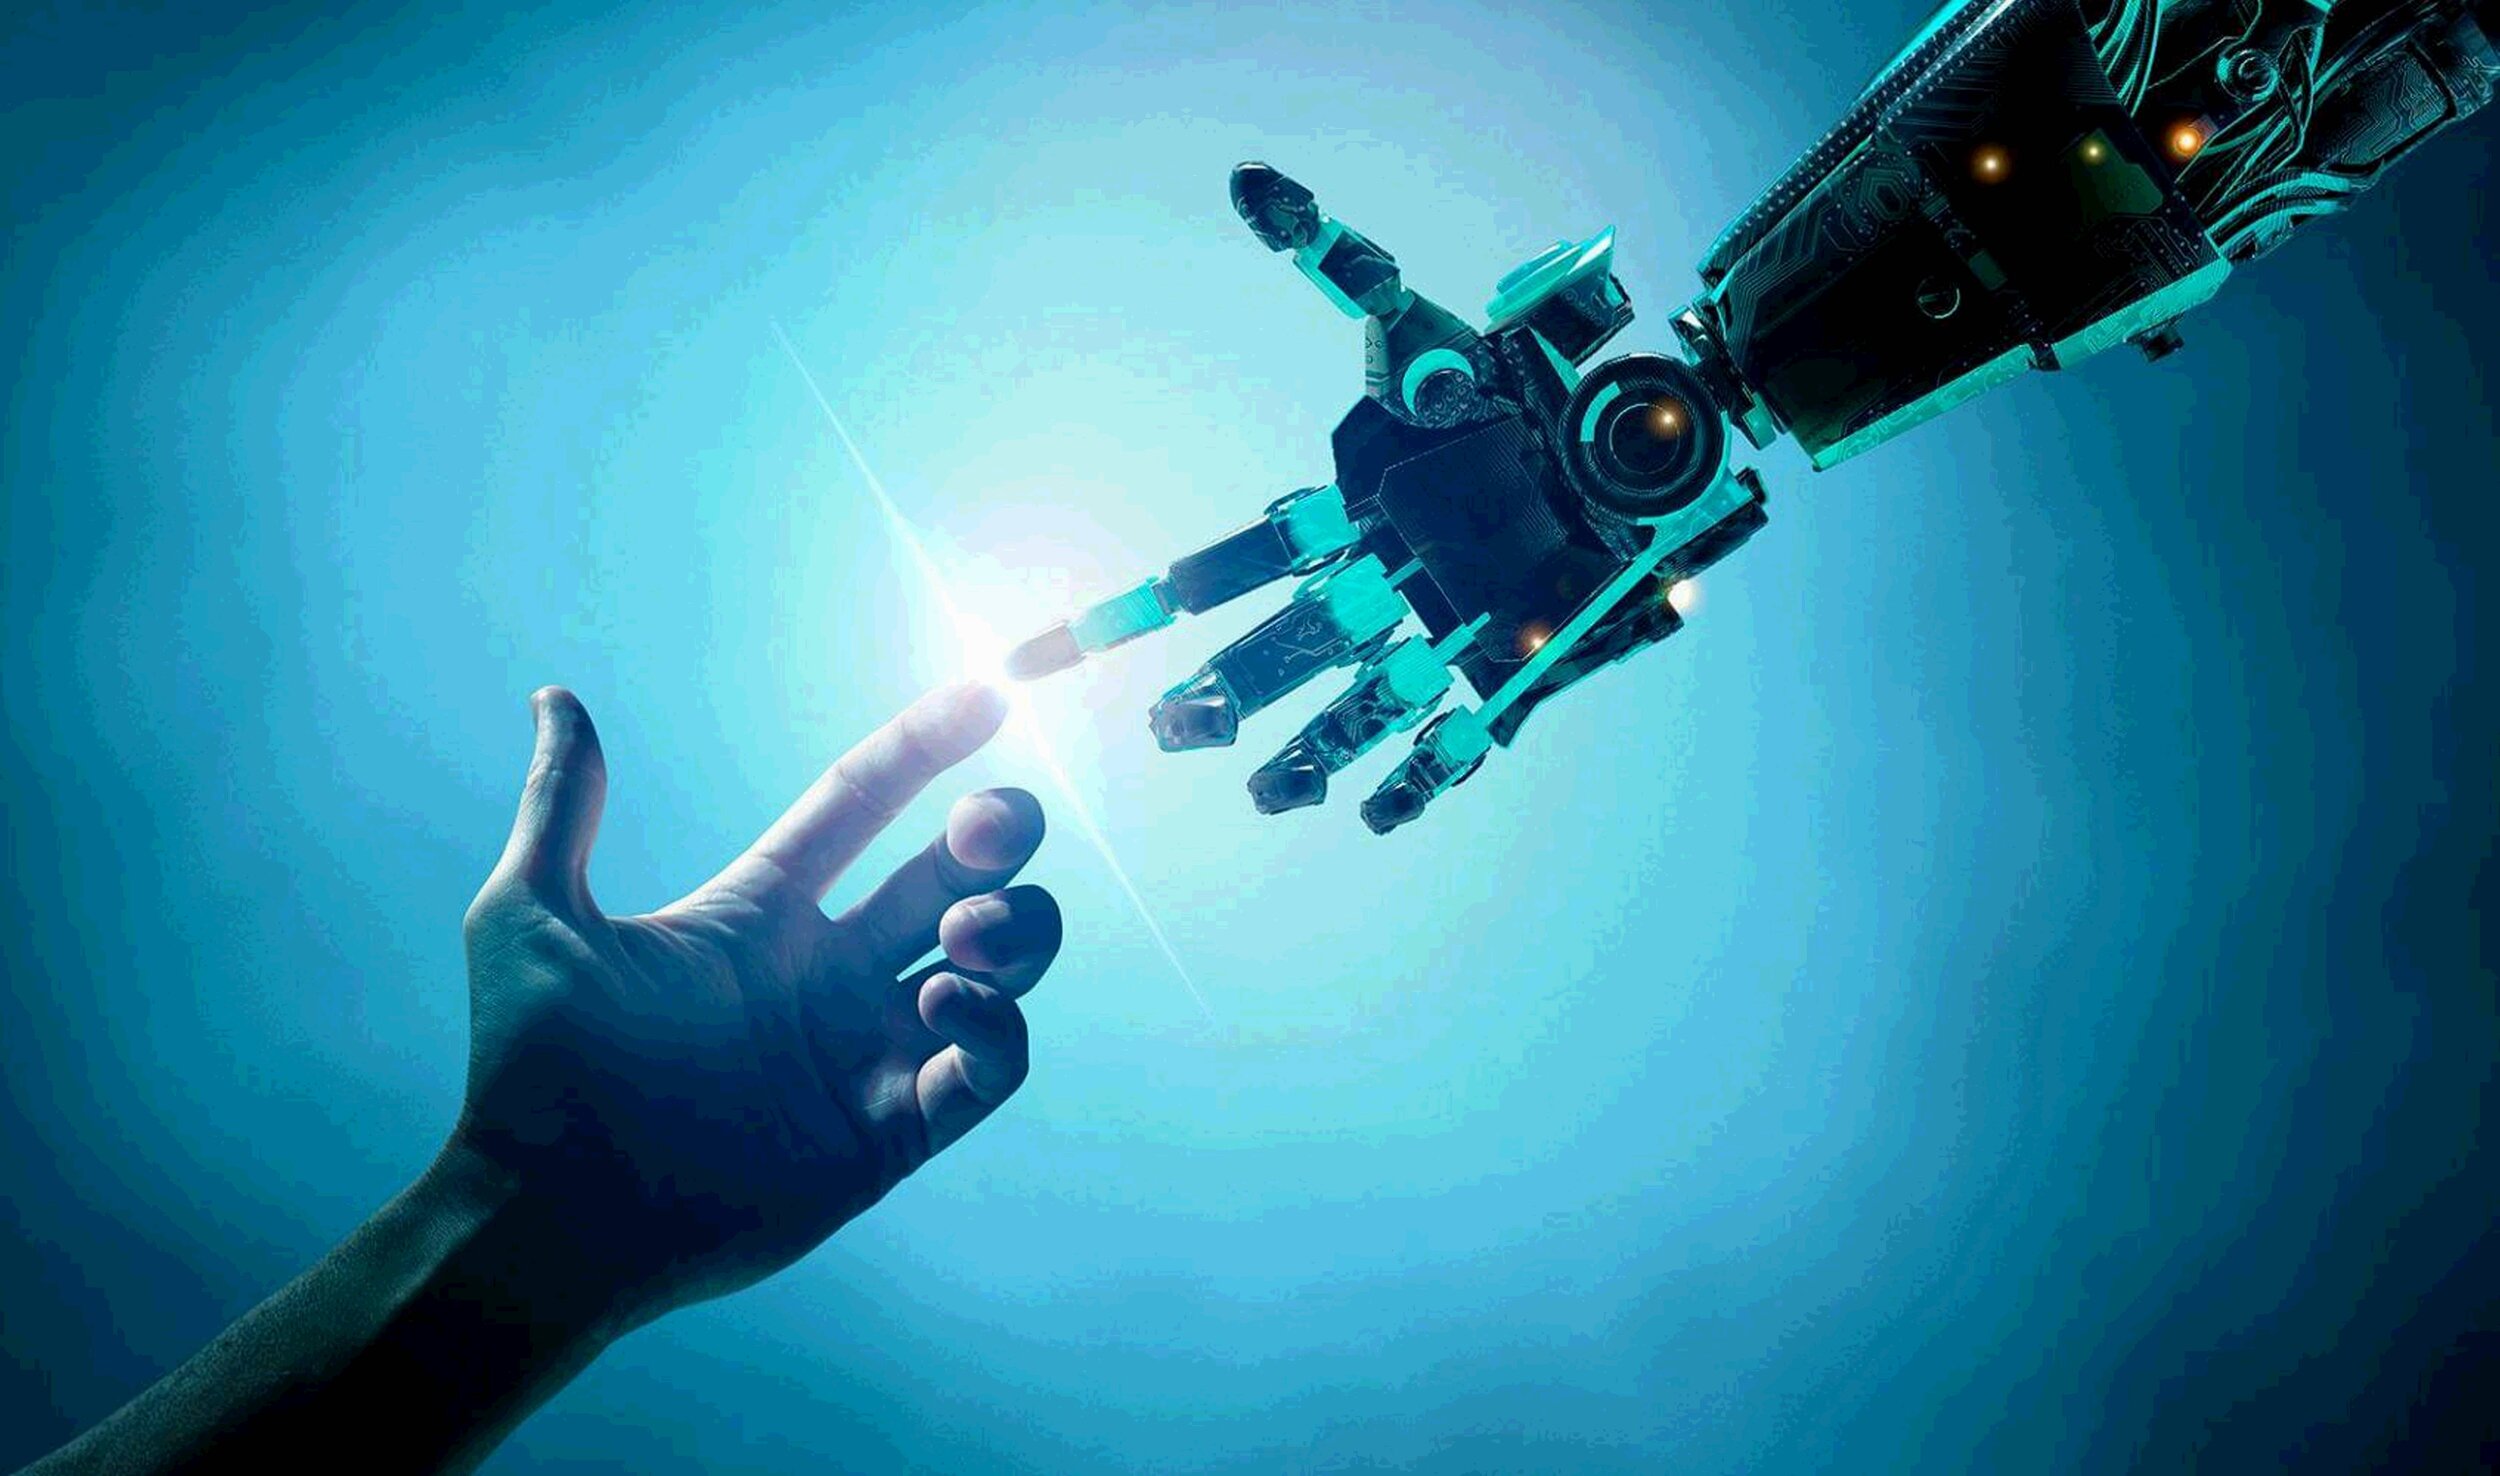 Ai for pictures. Рука робота. Технологии будущего. Рука робота и человека. Арт технологии.